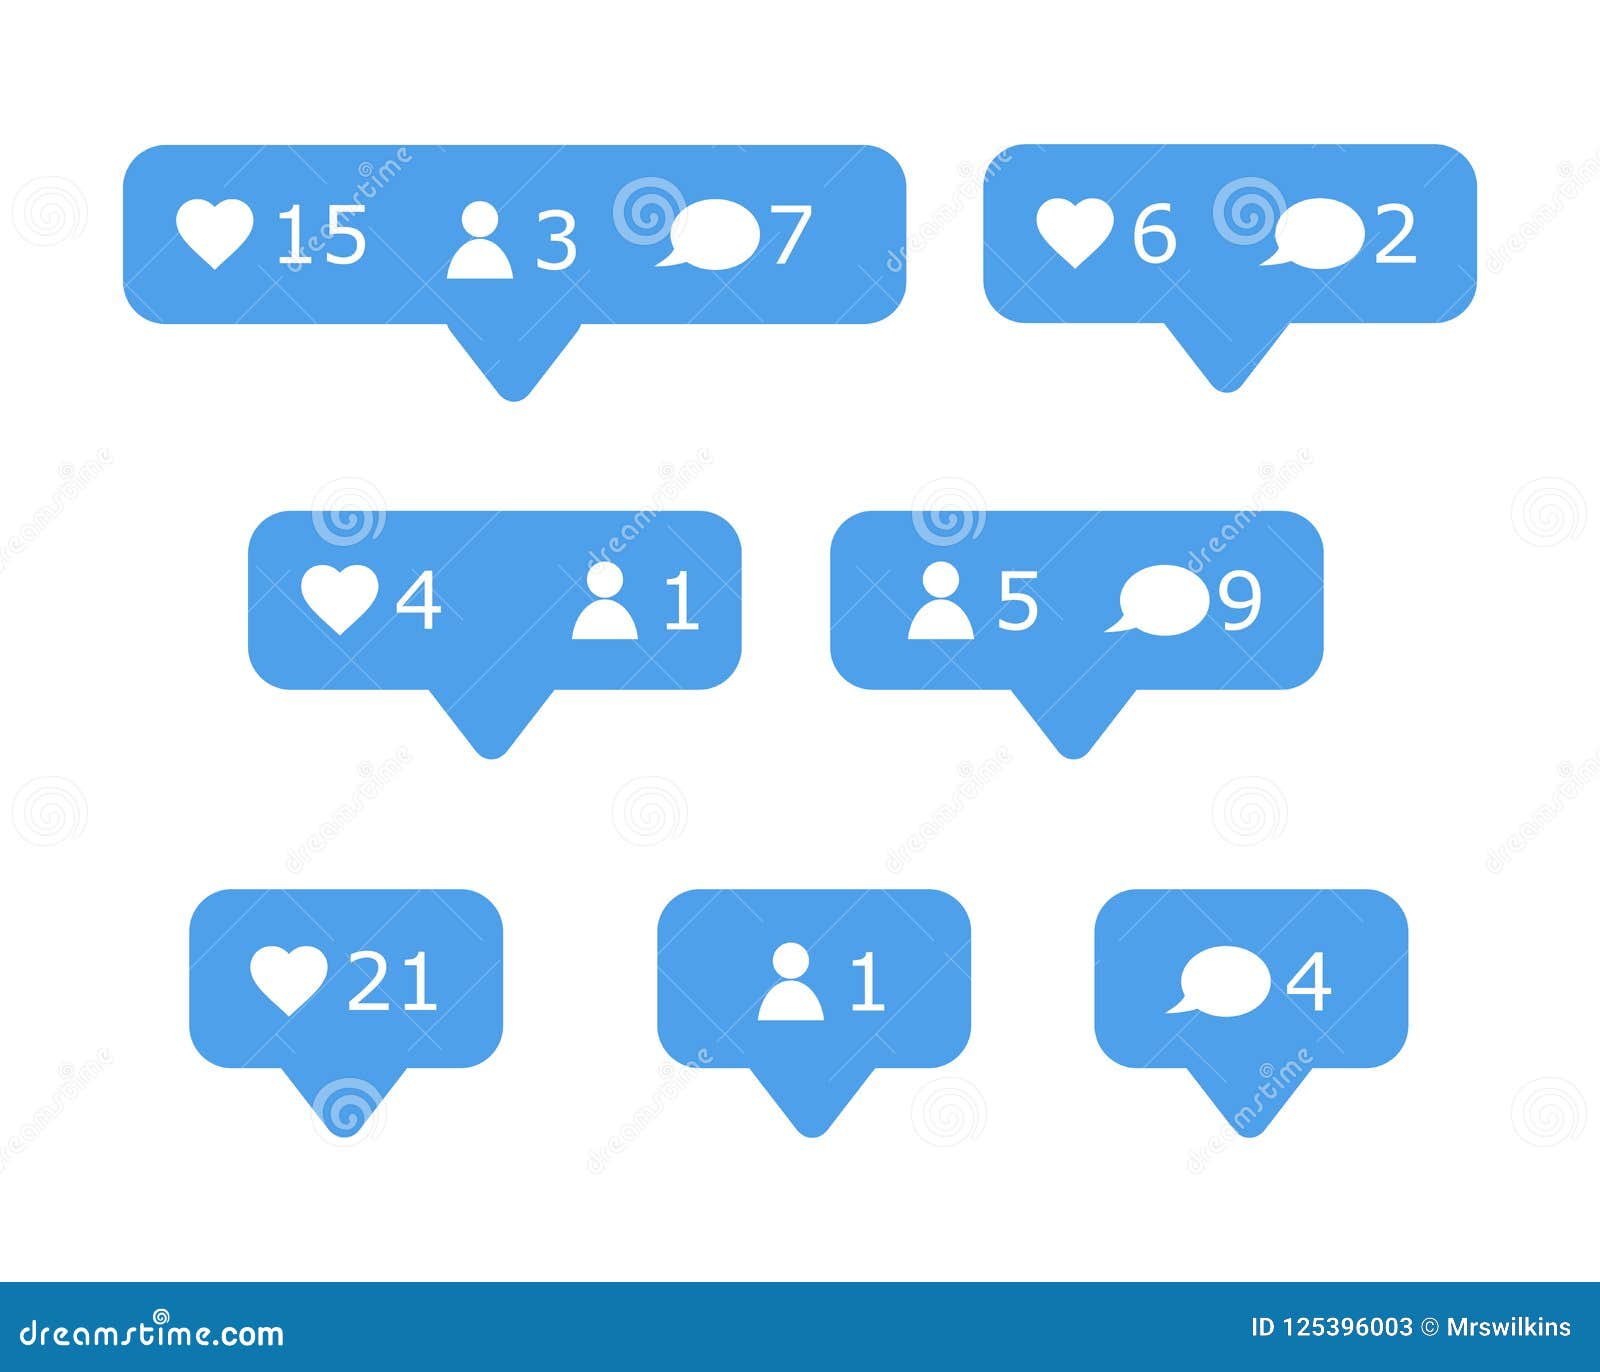 social media followers, comments, likes  set